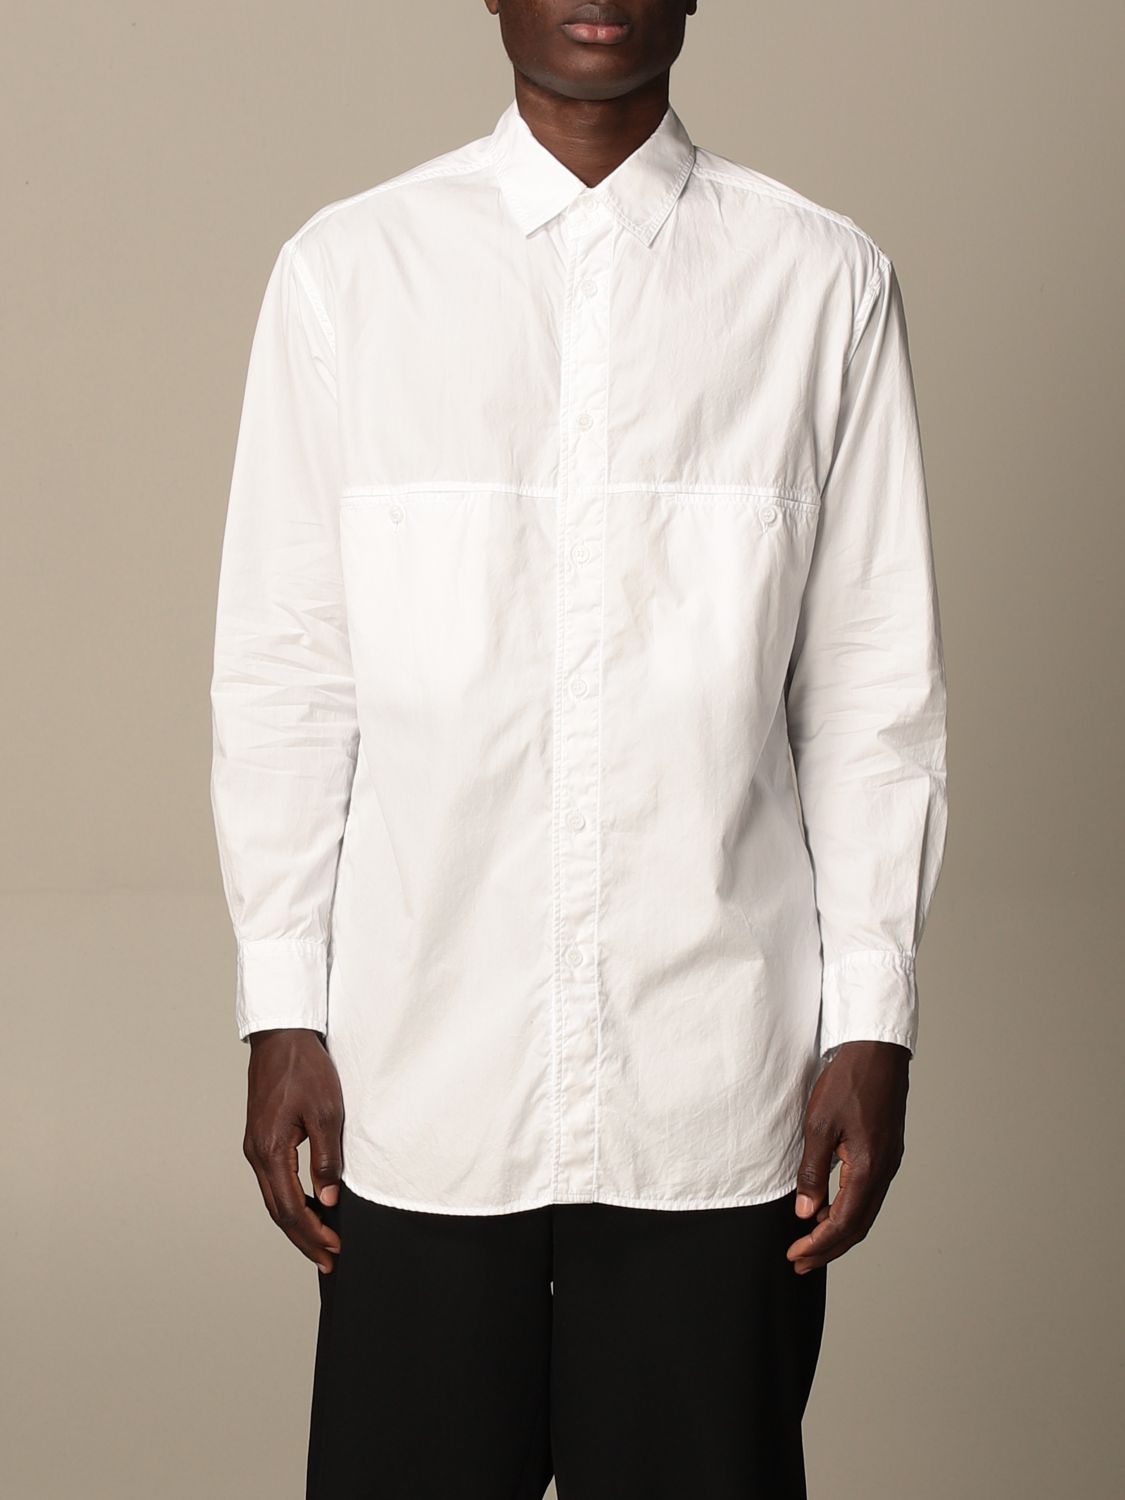 yohji Yamamoto White shirt - シャツ